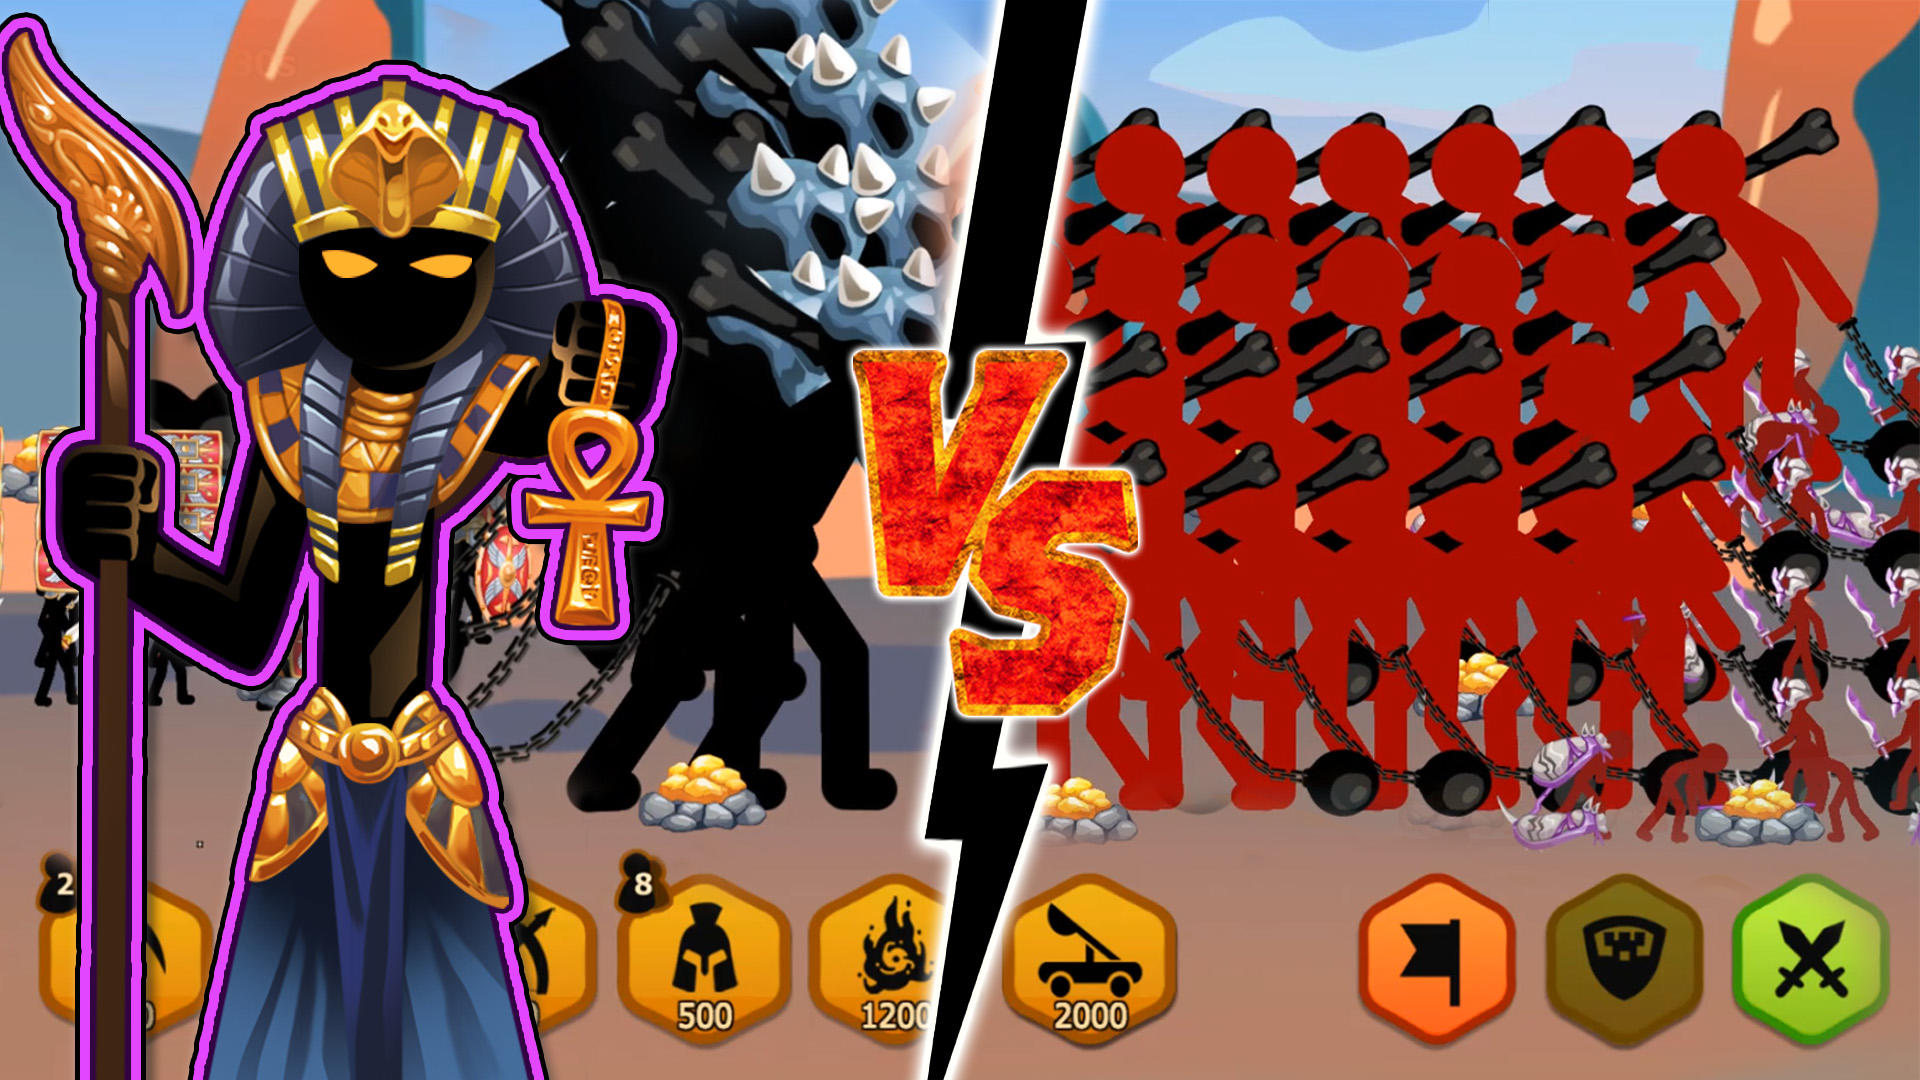 Stick War - Stickman Battle for Android - Download